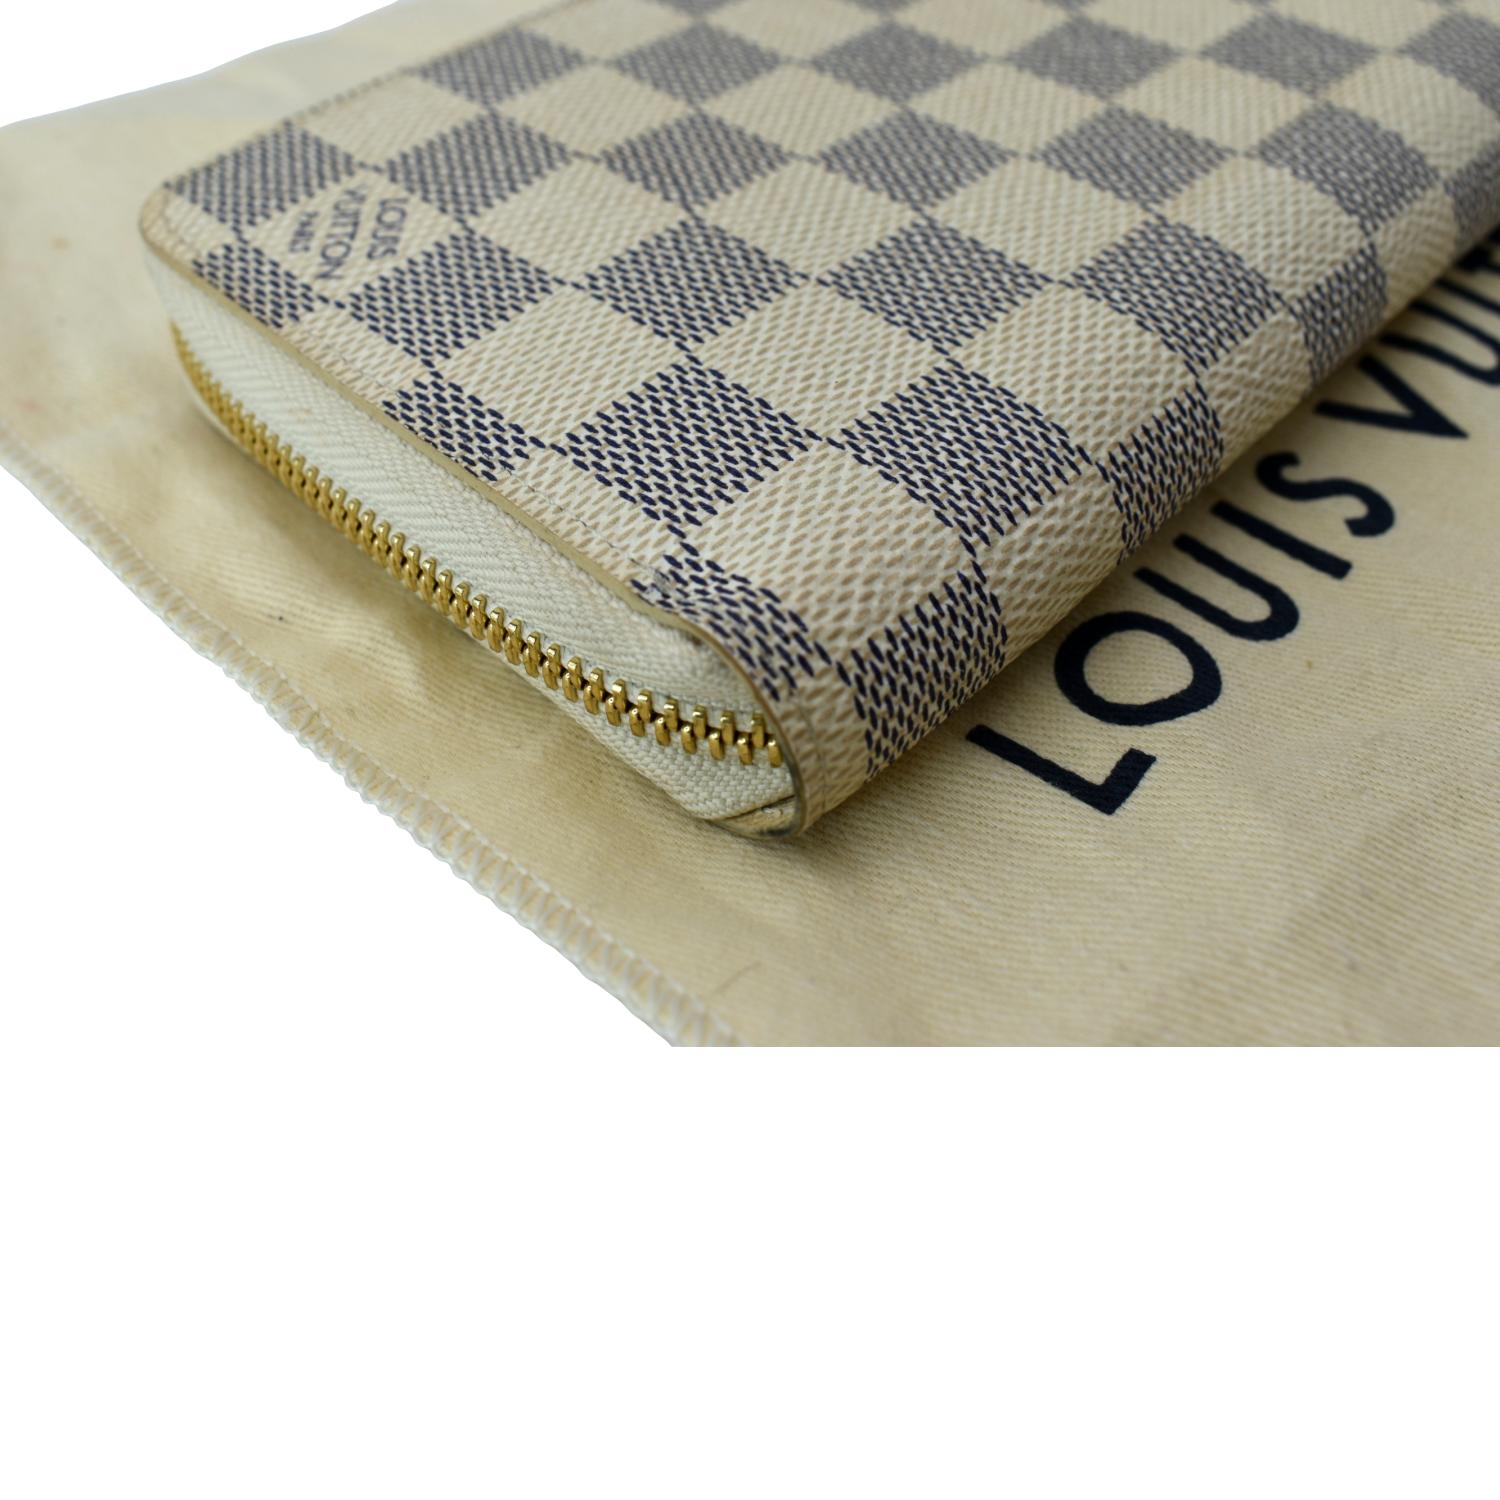 Authentic Louis Vuitton Damier Azur full size zip around wallet on